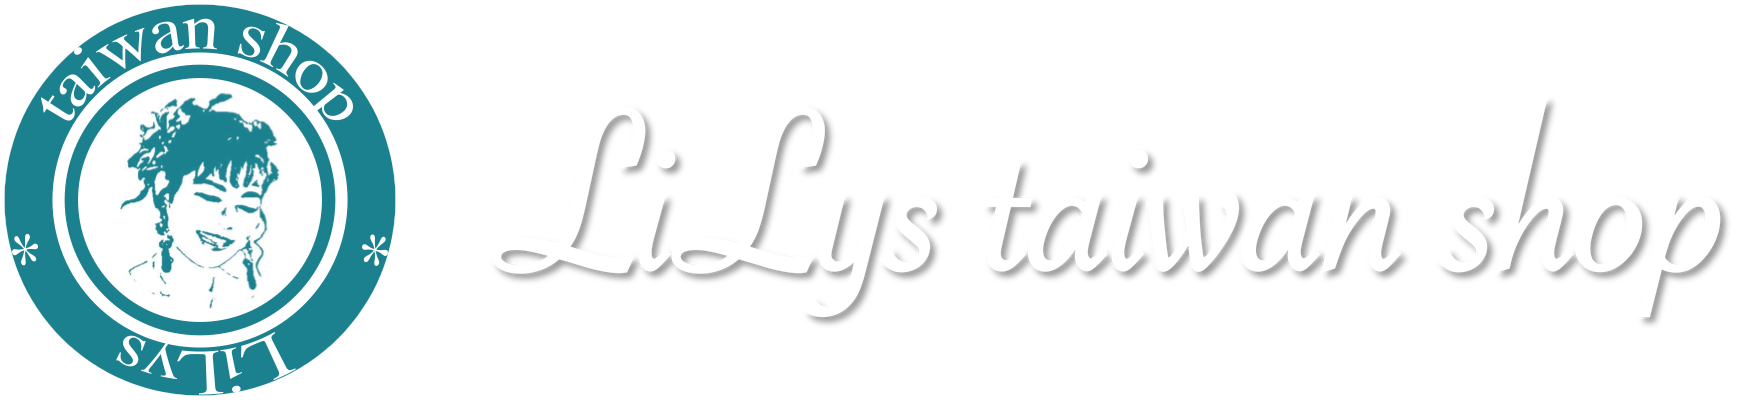 LiLys Taiwan Shop